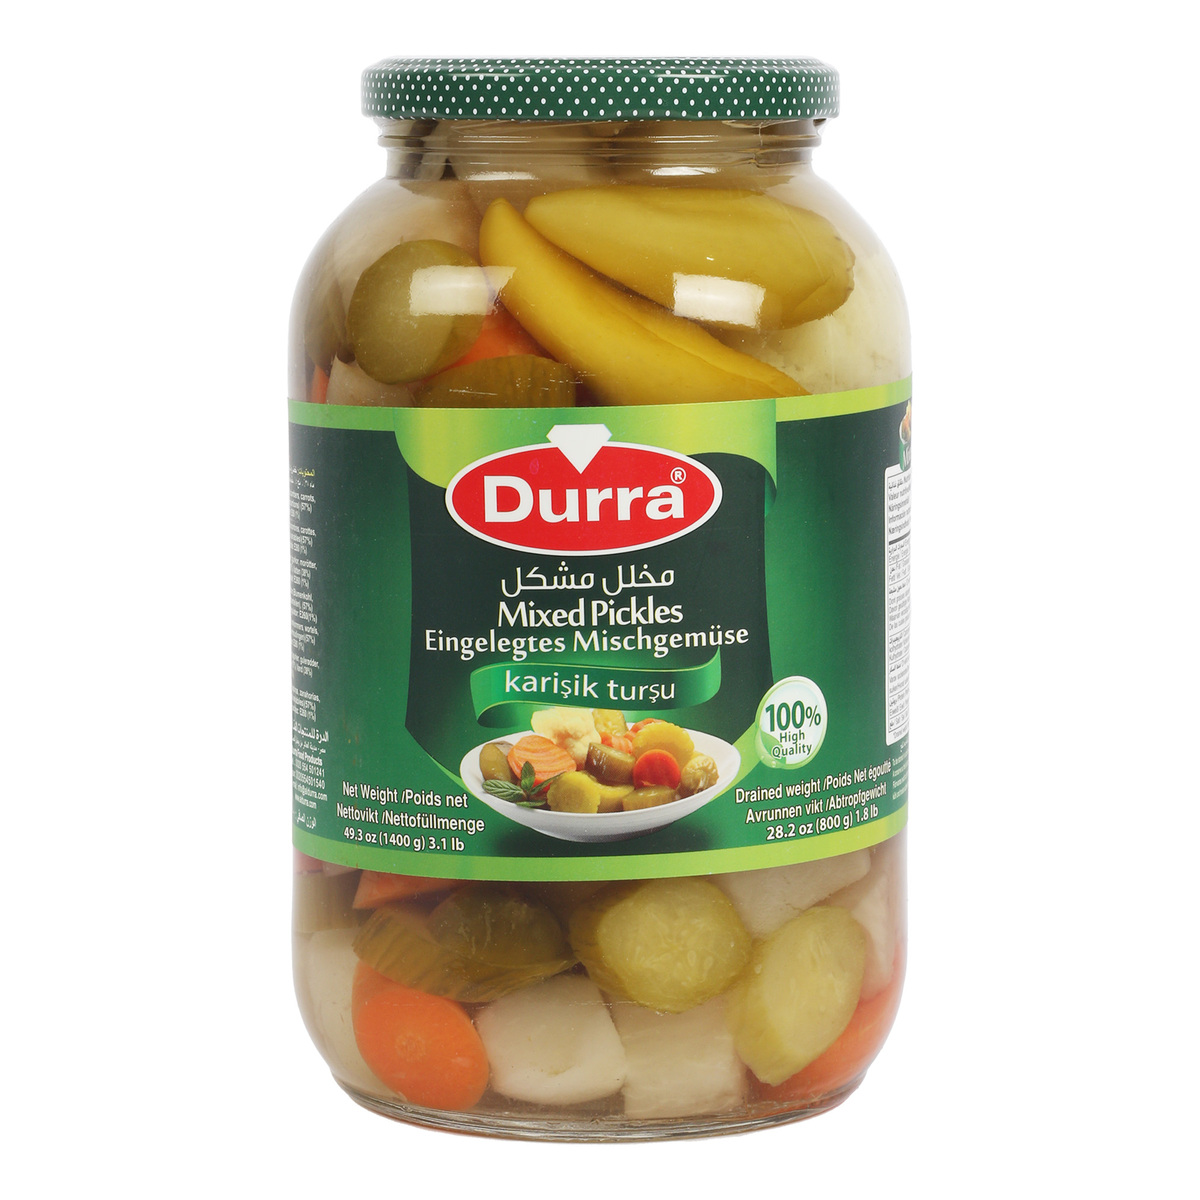 Durra Mixed Pickle 1.4 kg